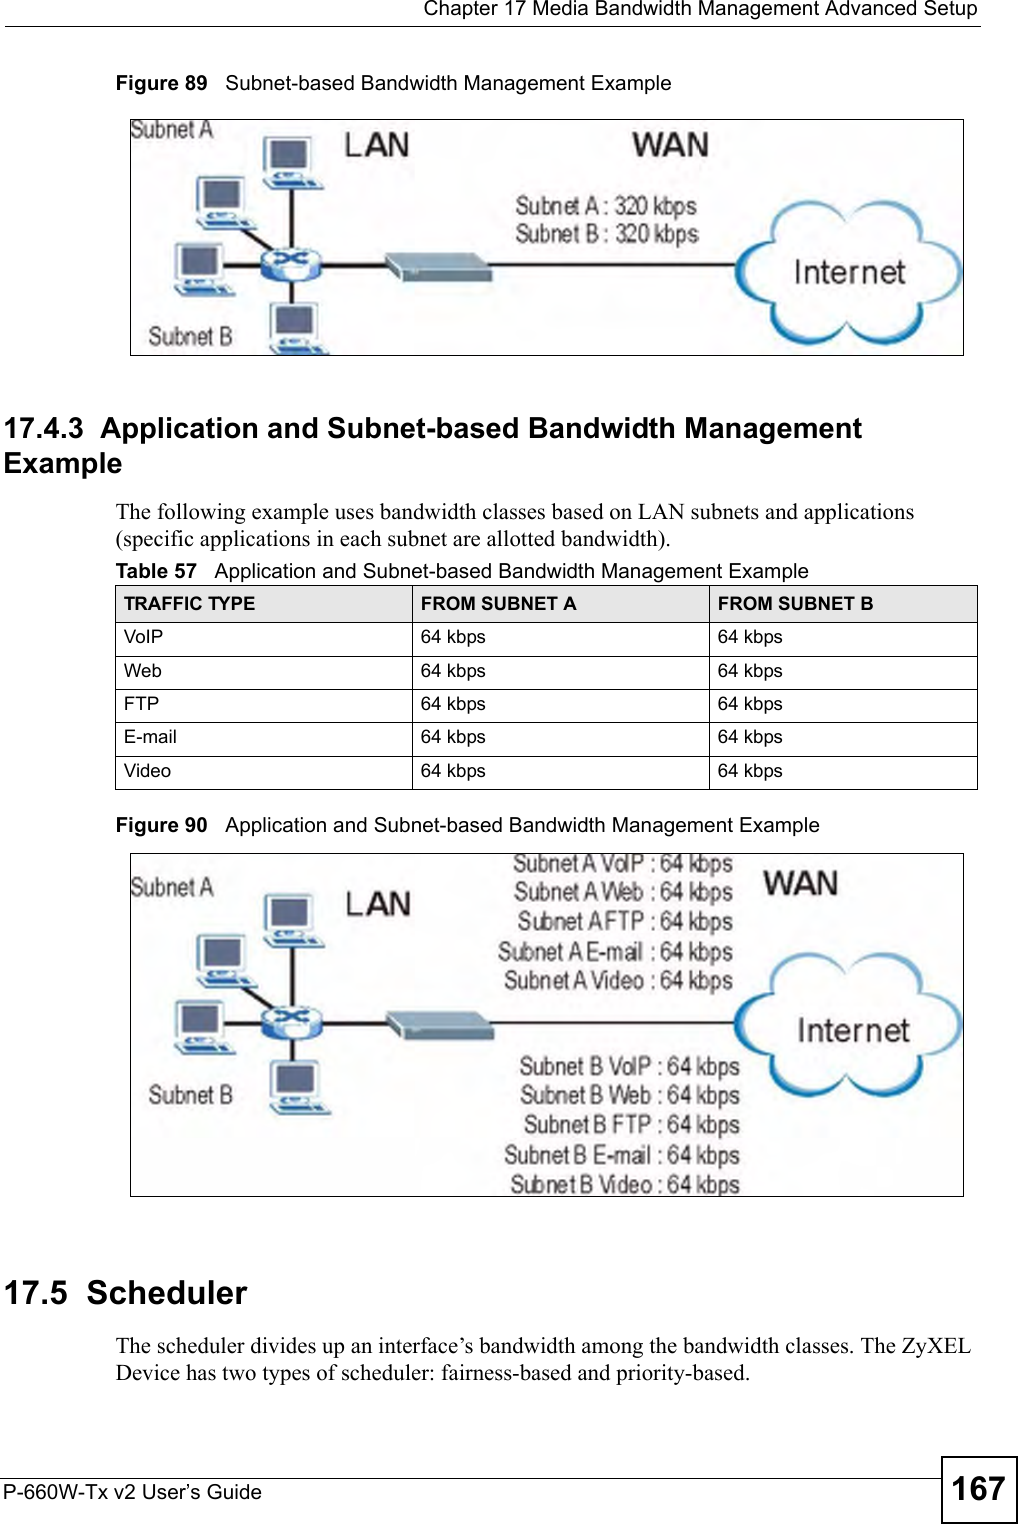  Chapter 17 Media Bandwidth Management Advanced SetupP-660W-Tx v2 User’s Guide 167Figure 89   Subnet-based Bandwidth Management Example17.4.3  Application and Subnet-based Bandwidth Management ExampleThe following example uses bandwidth classes based on LAN subnets and applications (specific applications in each subnet are allotted bandwidth).Figure 90   Application and Subnet-based Bandwidth Management Example17.5  SchedulerThe scheduler divides up an interface’s bandwidth among the bandwidth classes. The ZyXEL Device has two types of scheduler: fairness-based and priority-based. Table 57   Application and Subnet-based Bandwidth Management ExampleTRAFFIC TYPE FROM SUBNET A FROM SUBNET BVoIP 64 kbps 64 kbpsWeb 64 kbps 64 kbpsFTP 64 kbps 64 kbpsE-mail 64 kbps 64 kbpsVideo 64 kbps 64 kbps